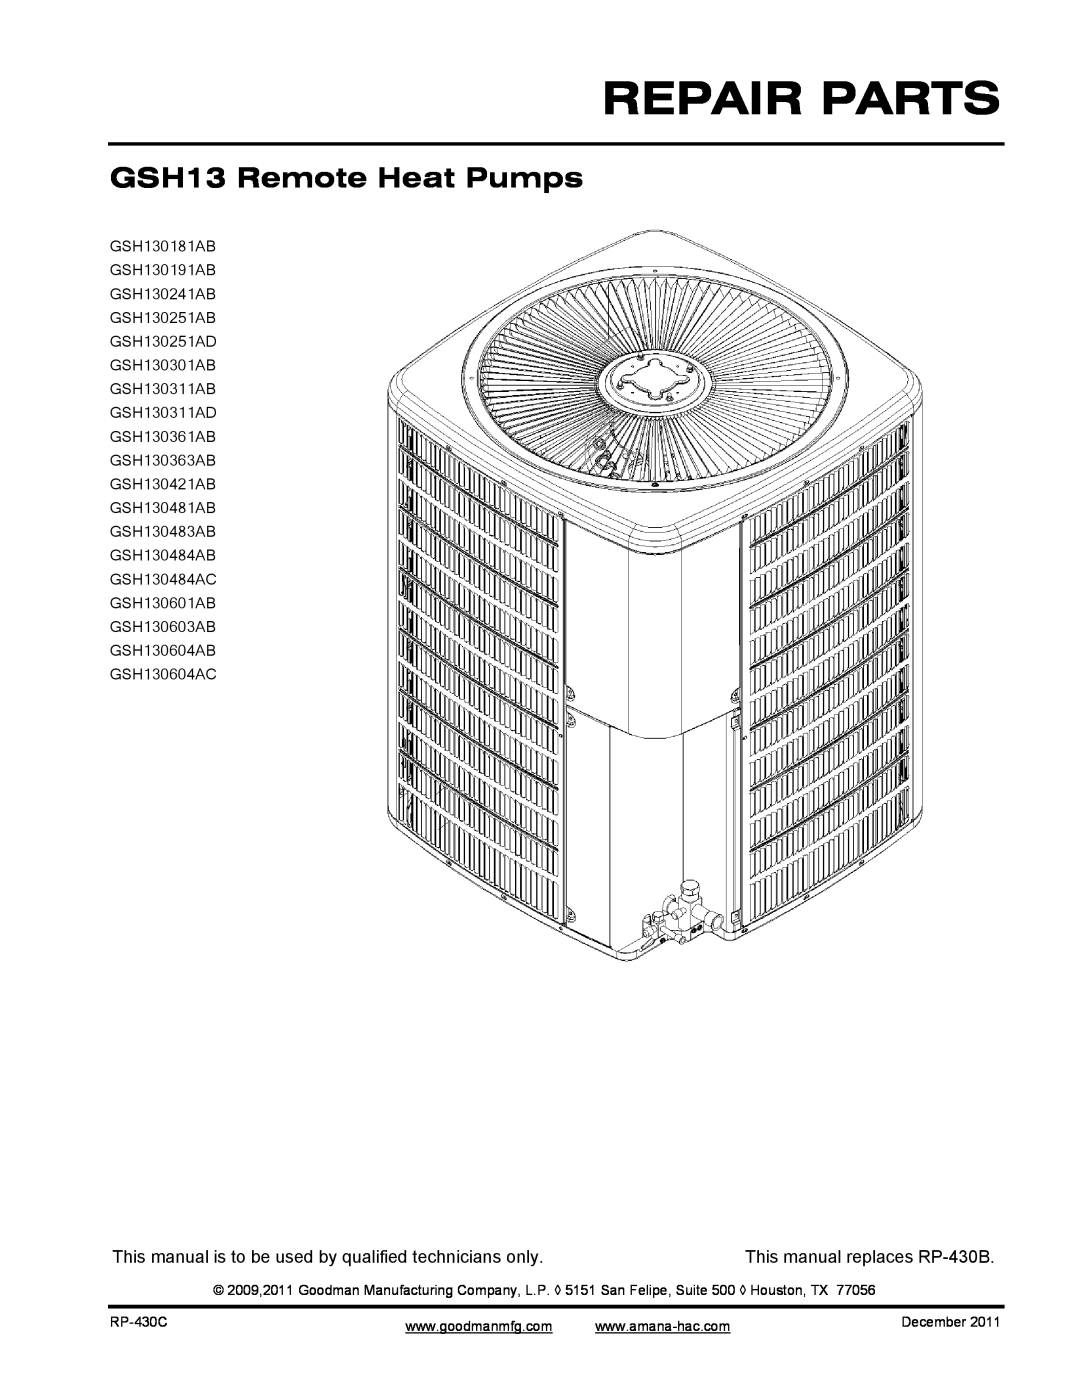 Goodman Mfg RP-430C manual Repair Parts, GSH13 Remote Heat Pumps 